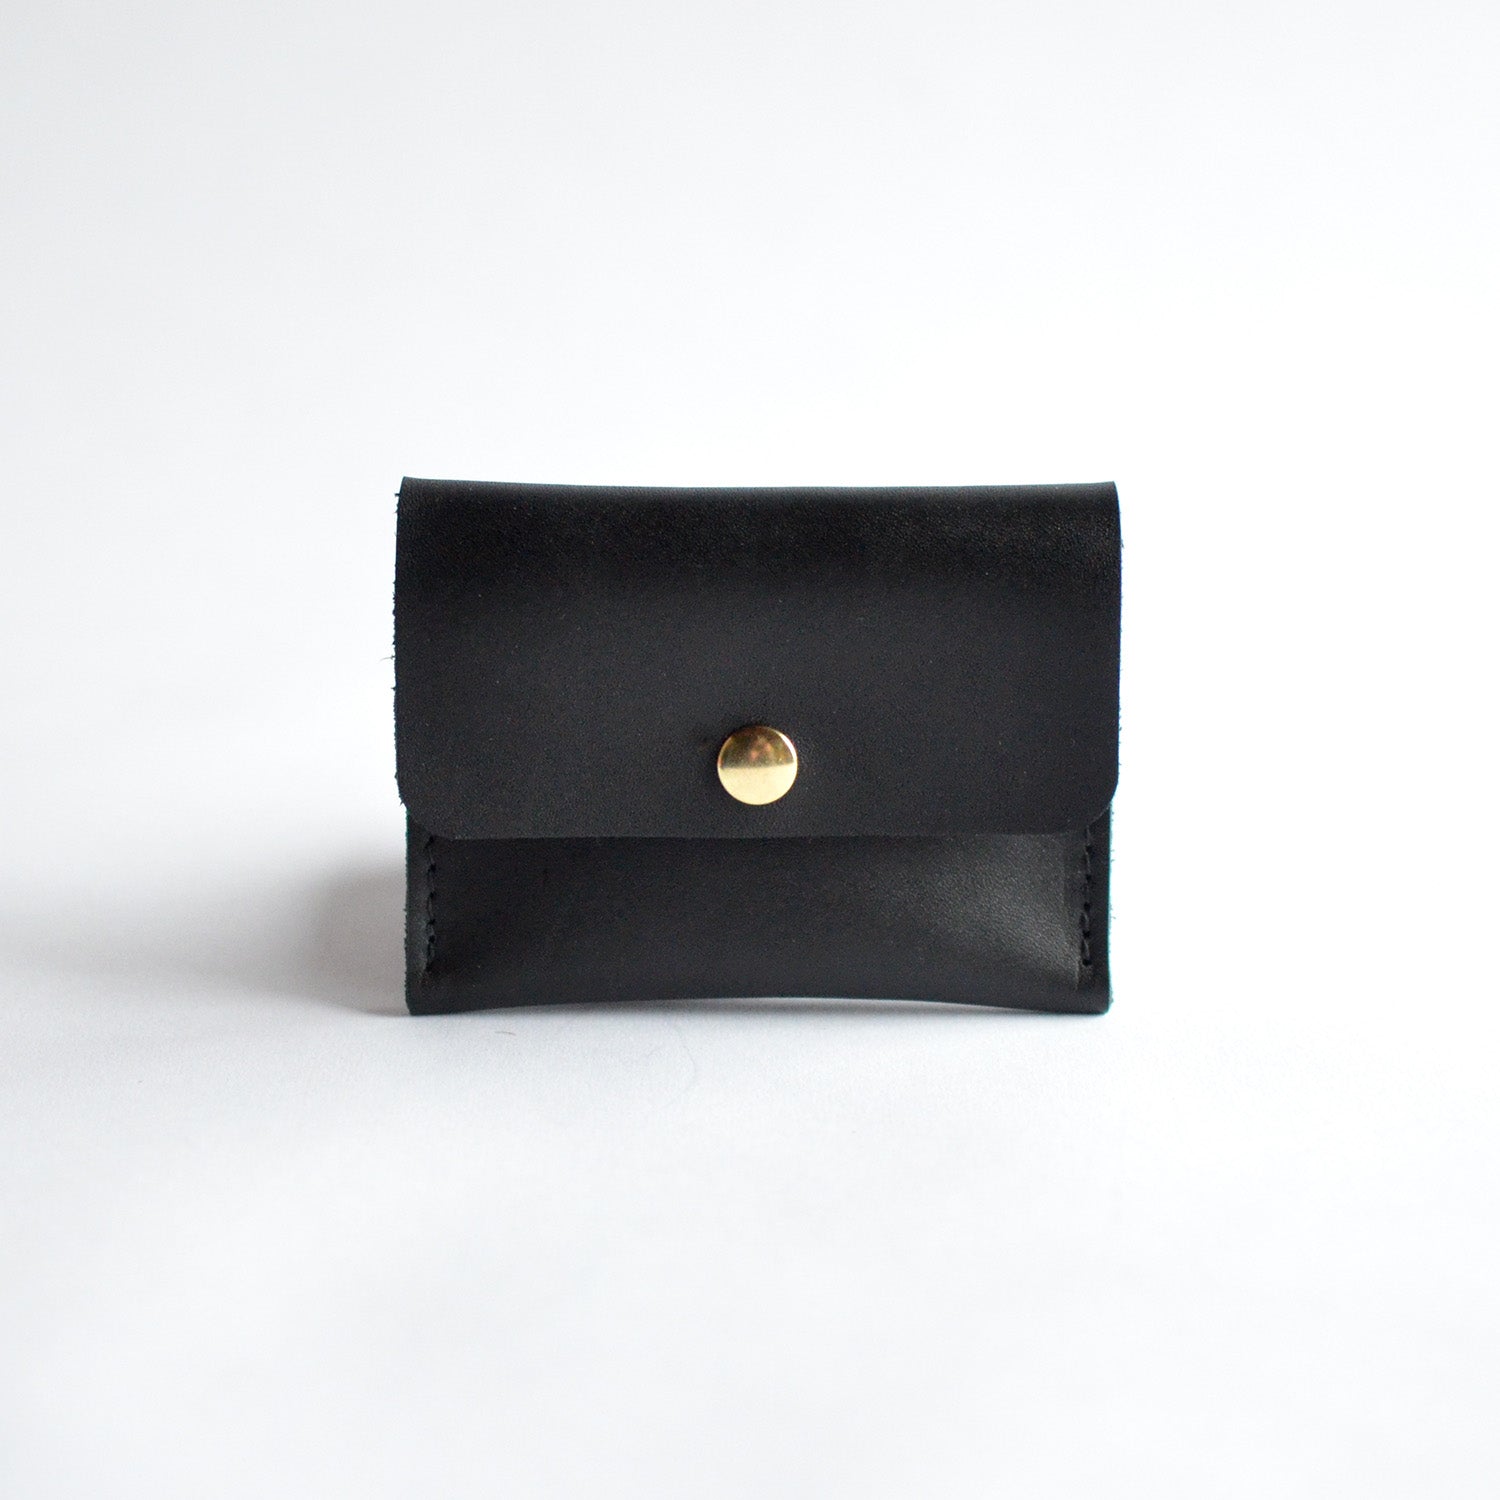 Black leather wallet/mini bag